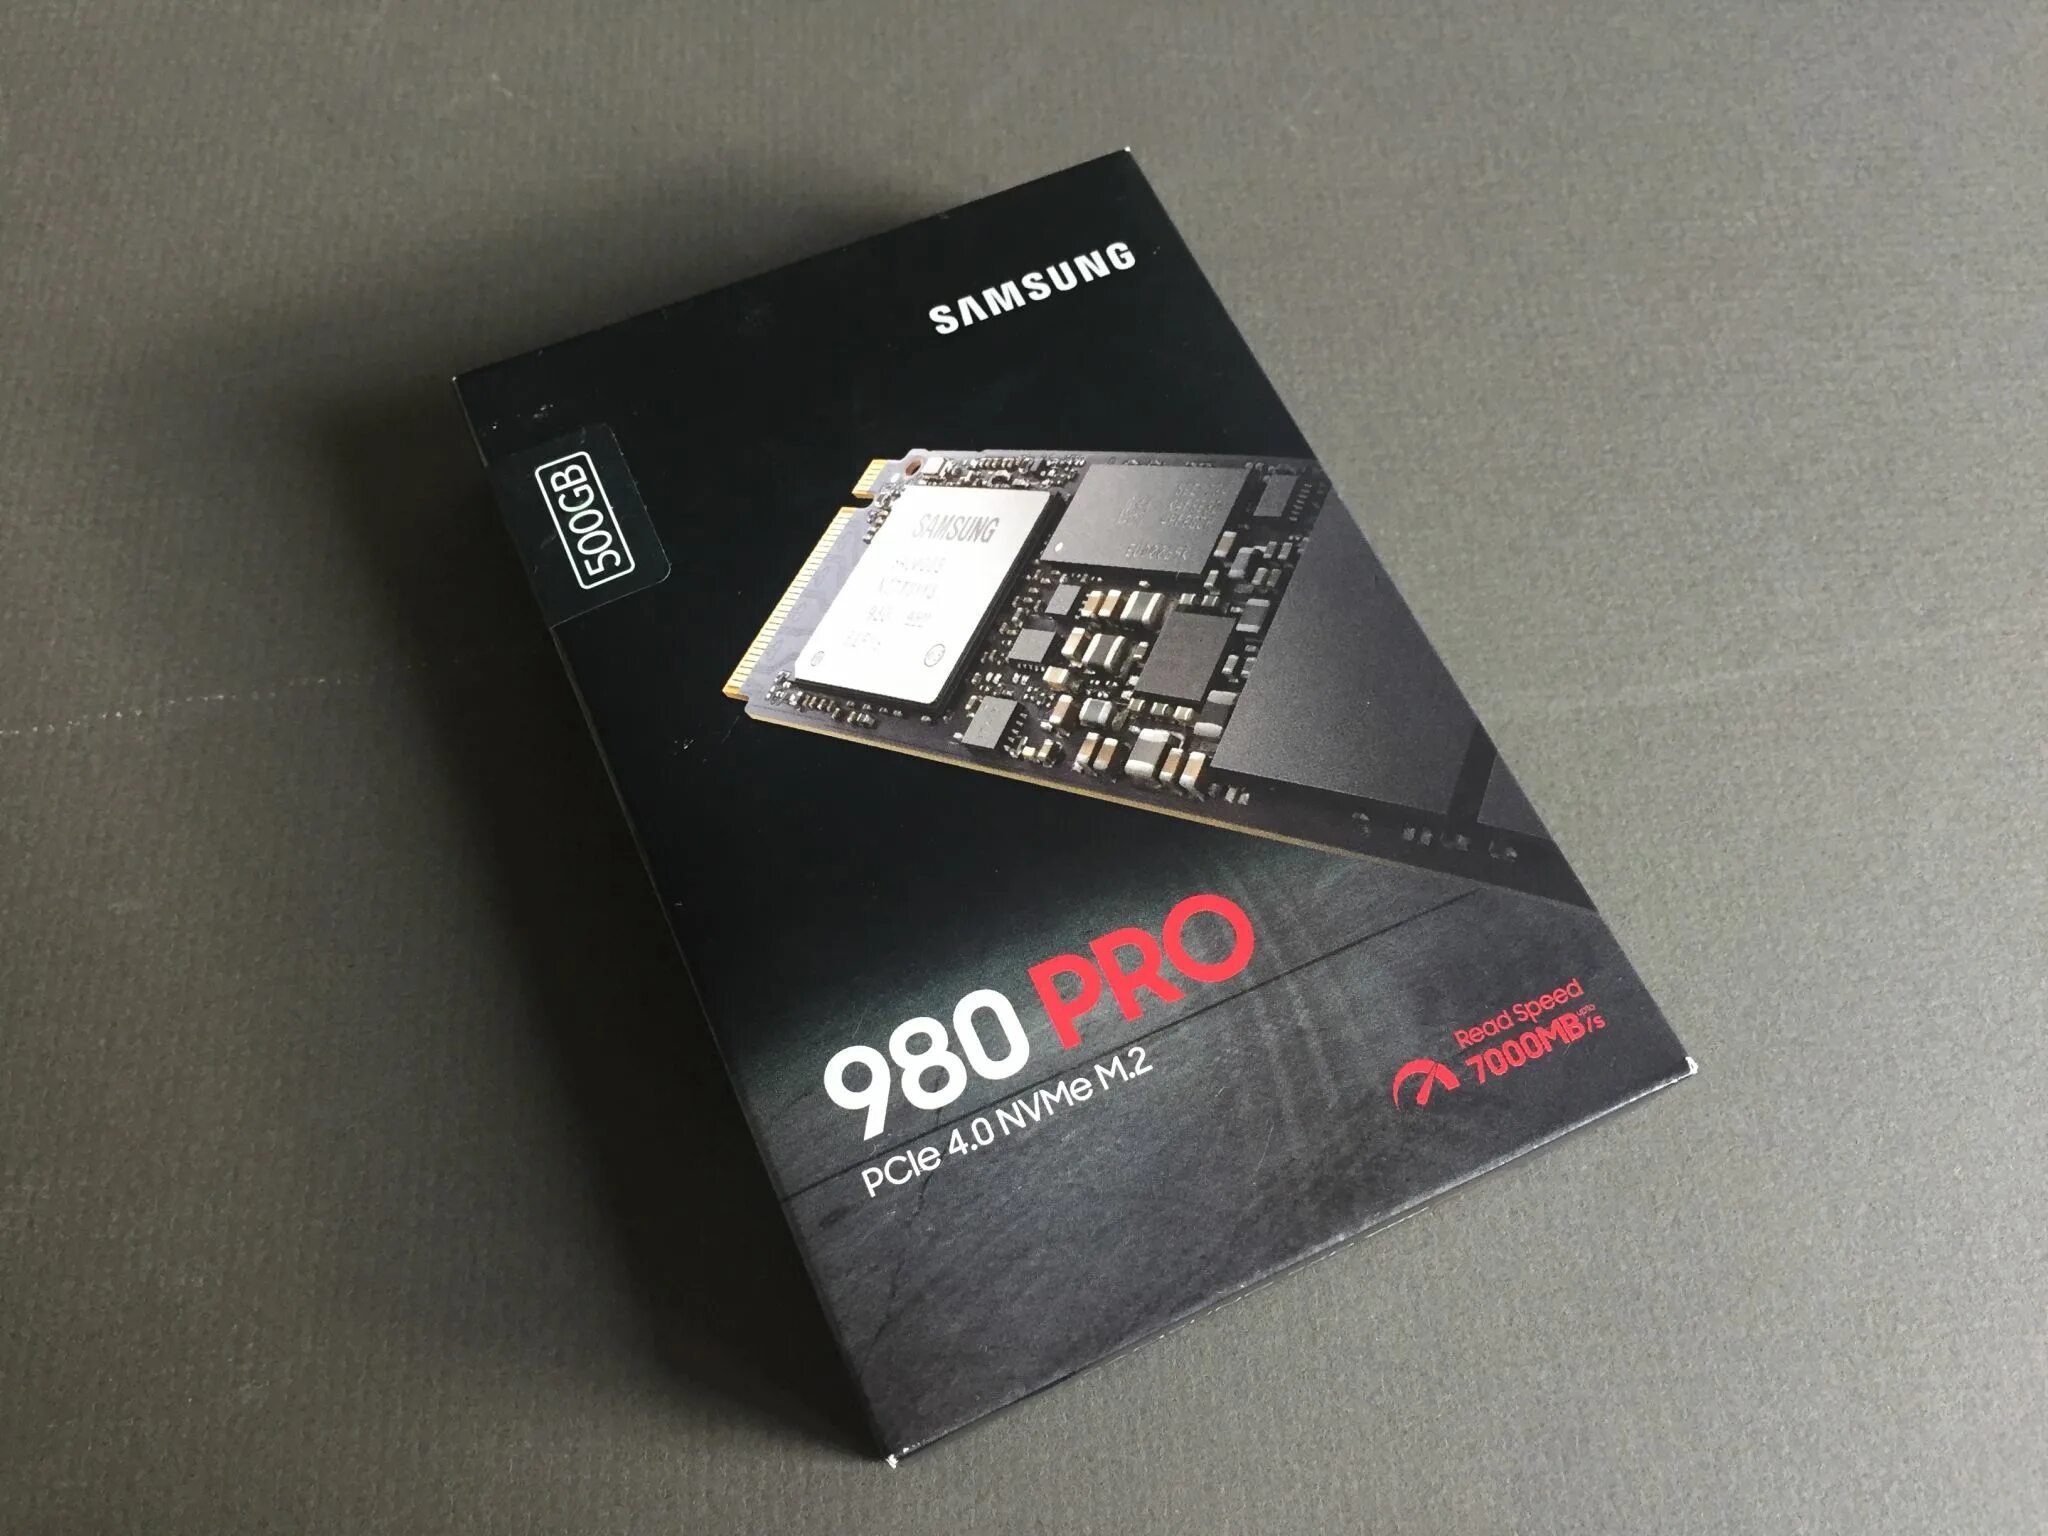 Ssd накопитель samsung 980 m 2 2280. SSD Samsung 980 Pro. Samsung 980 Pro 500gb. Samsung SSD 980 Pro 500gb. SSD Samsung 980 Pro NVME M.2 250 ГБ.